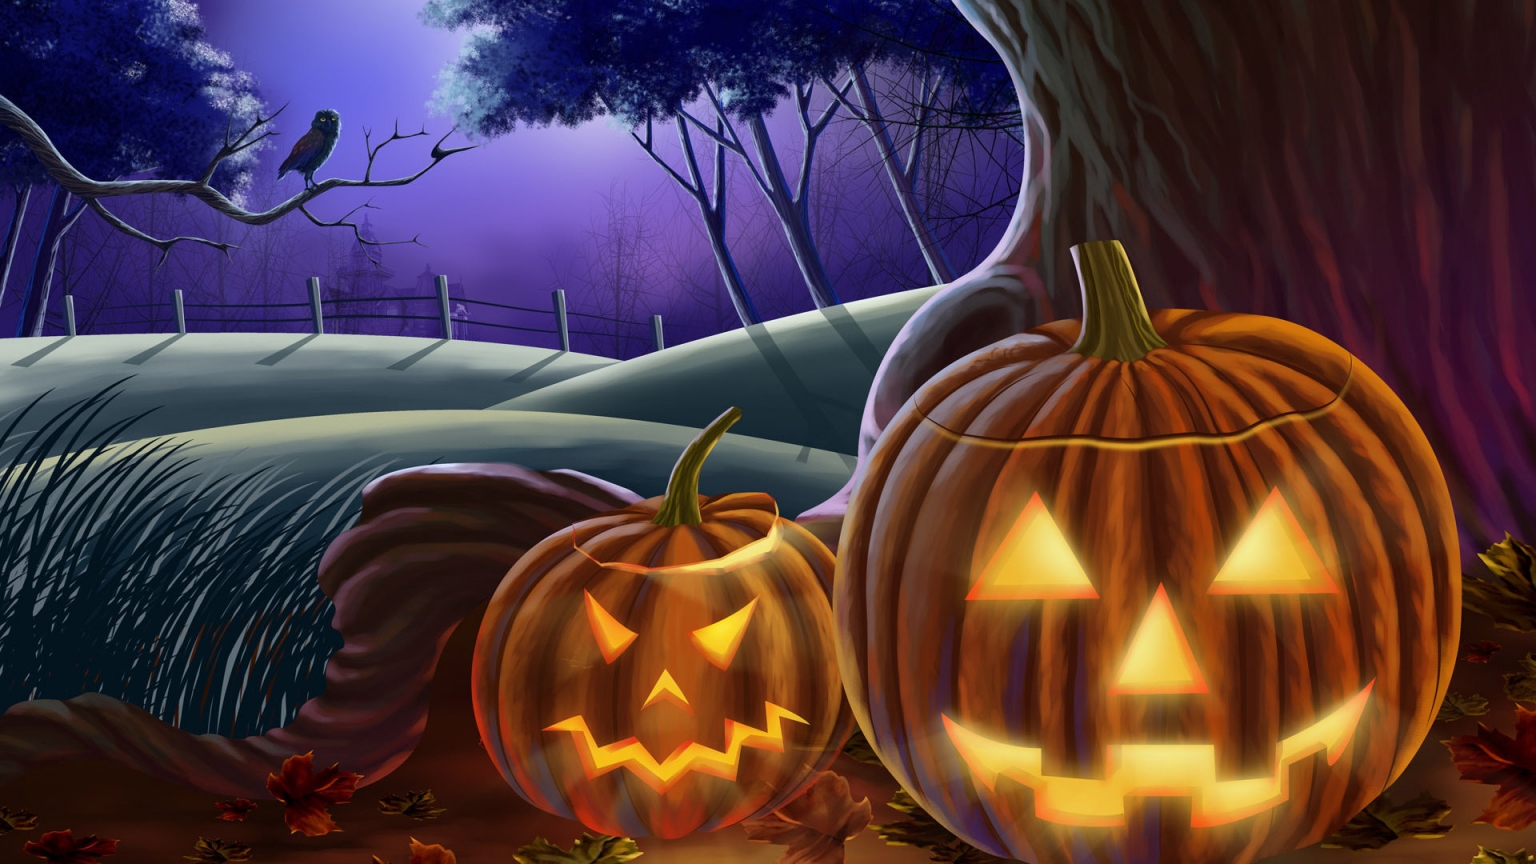 Illuminated Pumpkins for Halloween for 1536 x 864 HDTV resolution